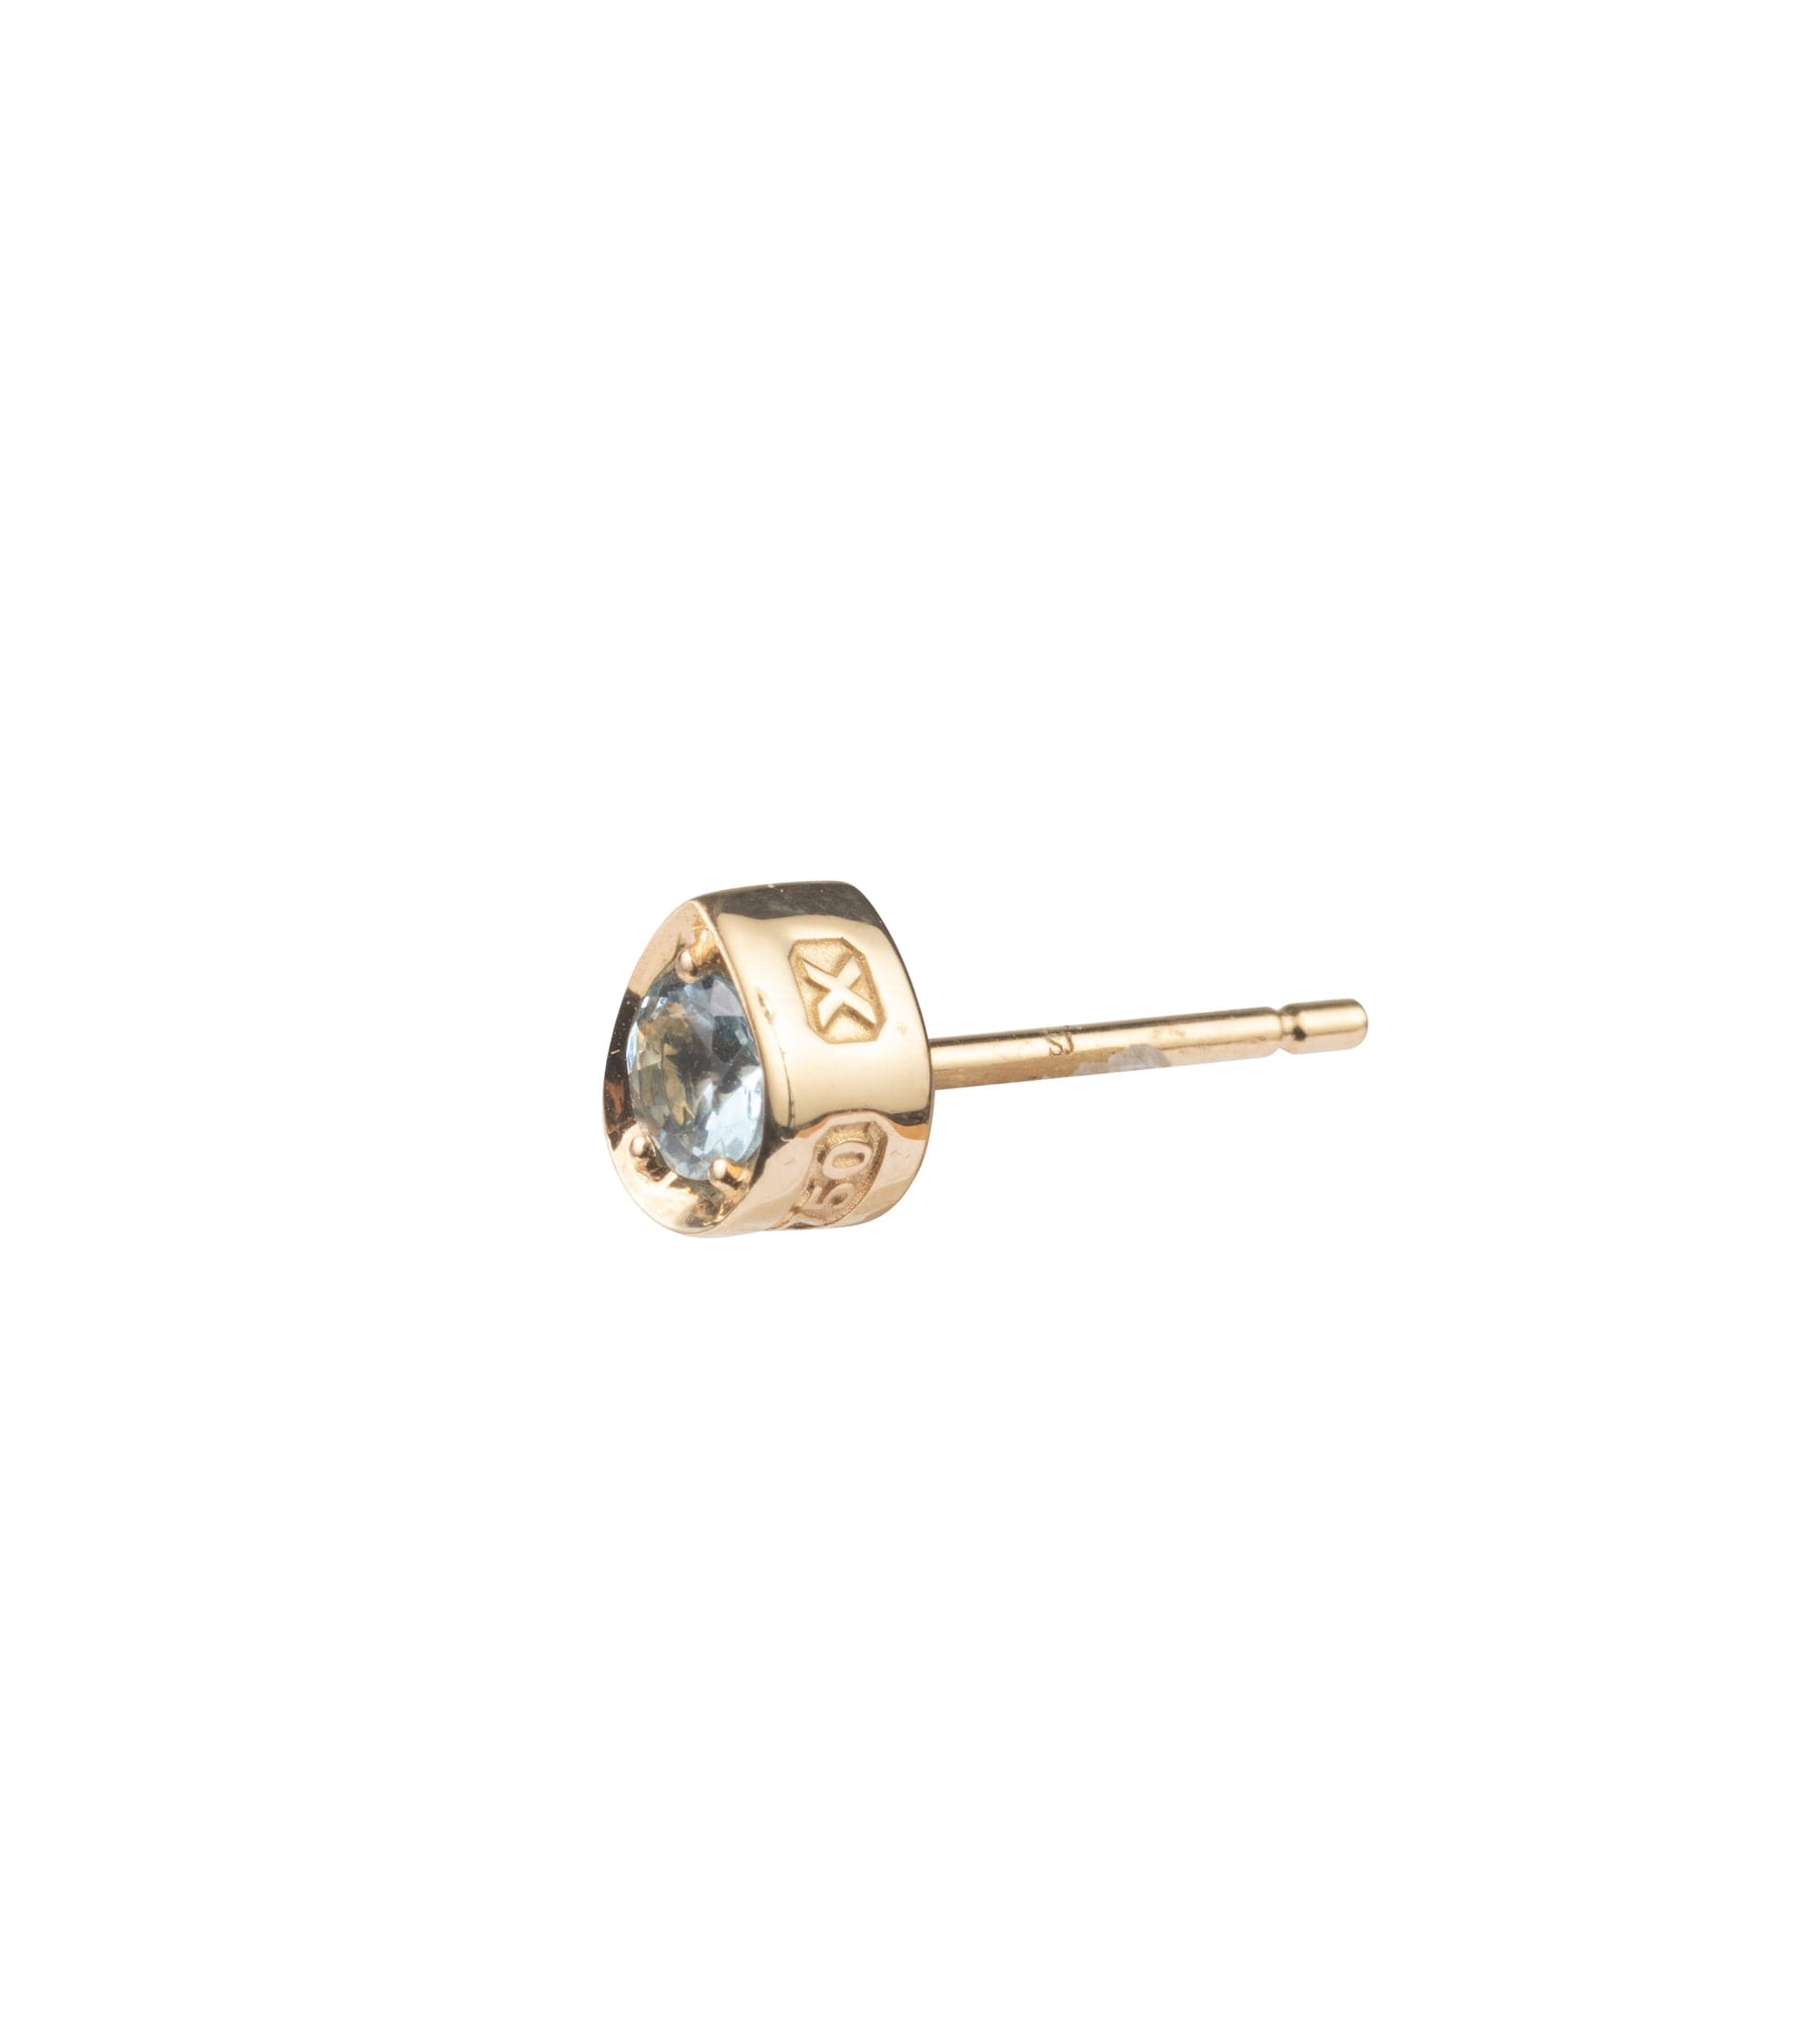 0.7ct diamond stud earrings in rose gold